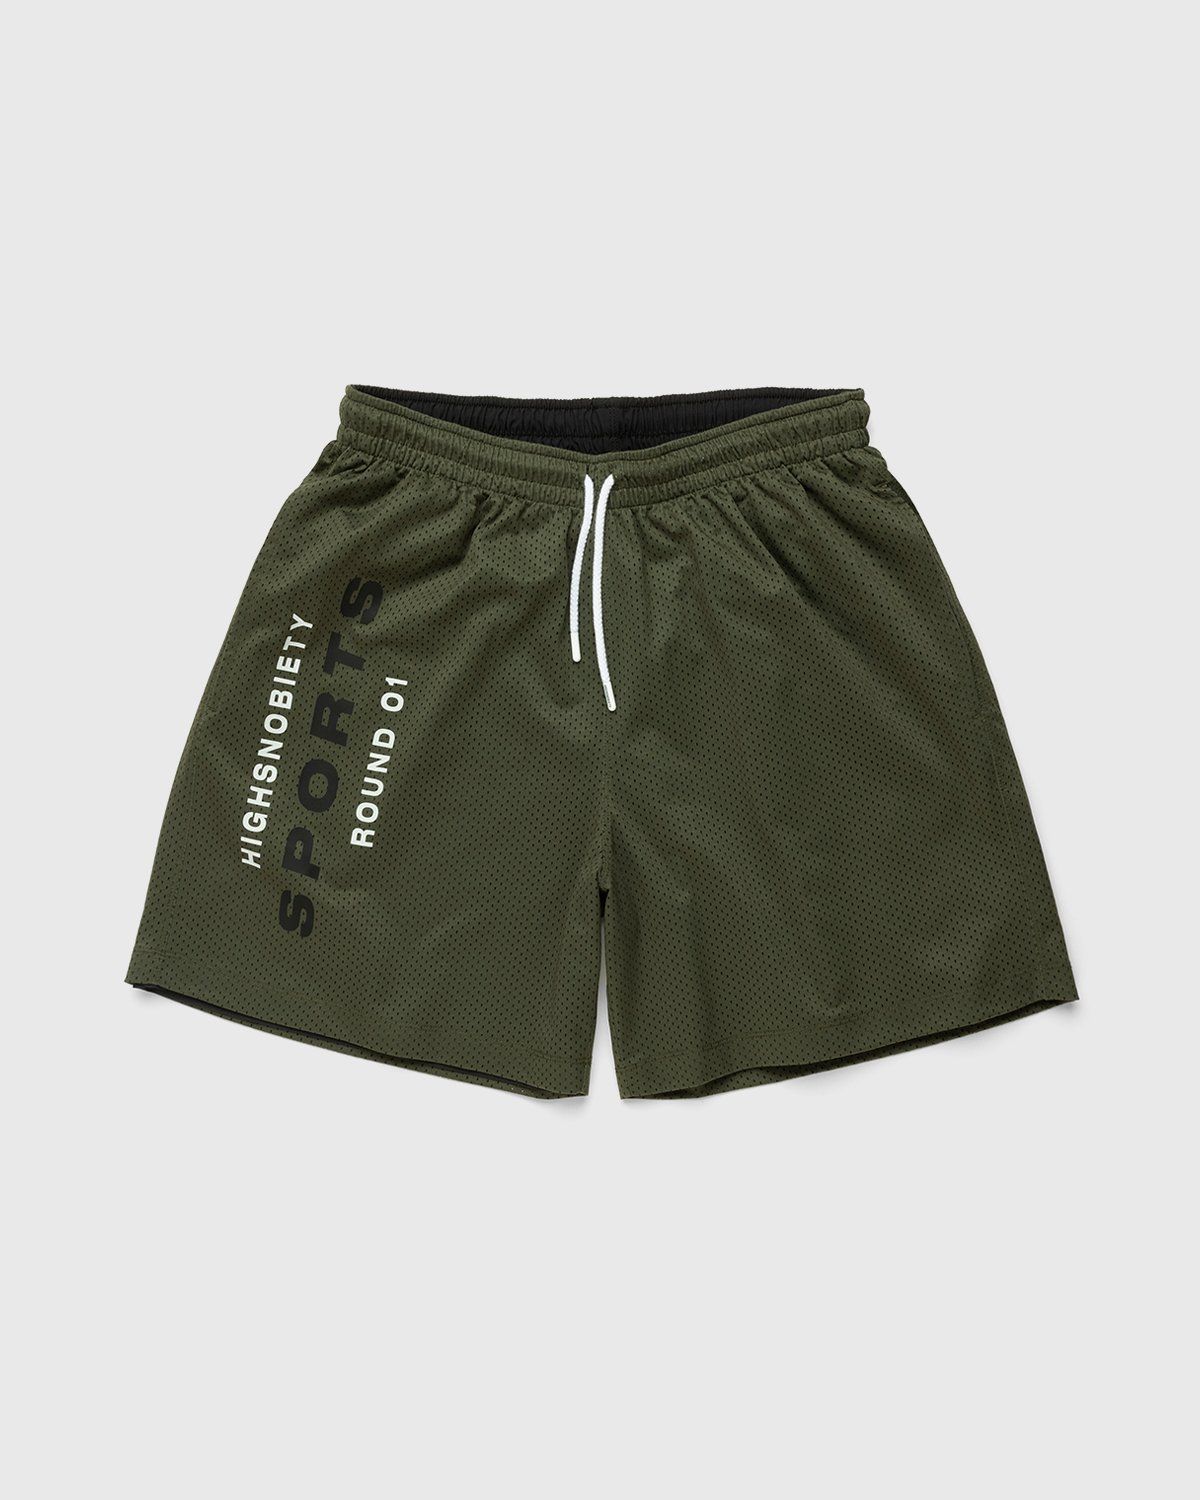 Highsnobiety – HS Sports Reversible Mesh Shorts Black/Khaki - Short Cuts - Green - Image 1